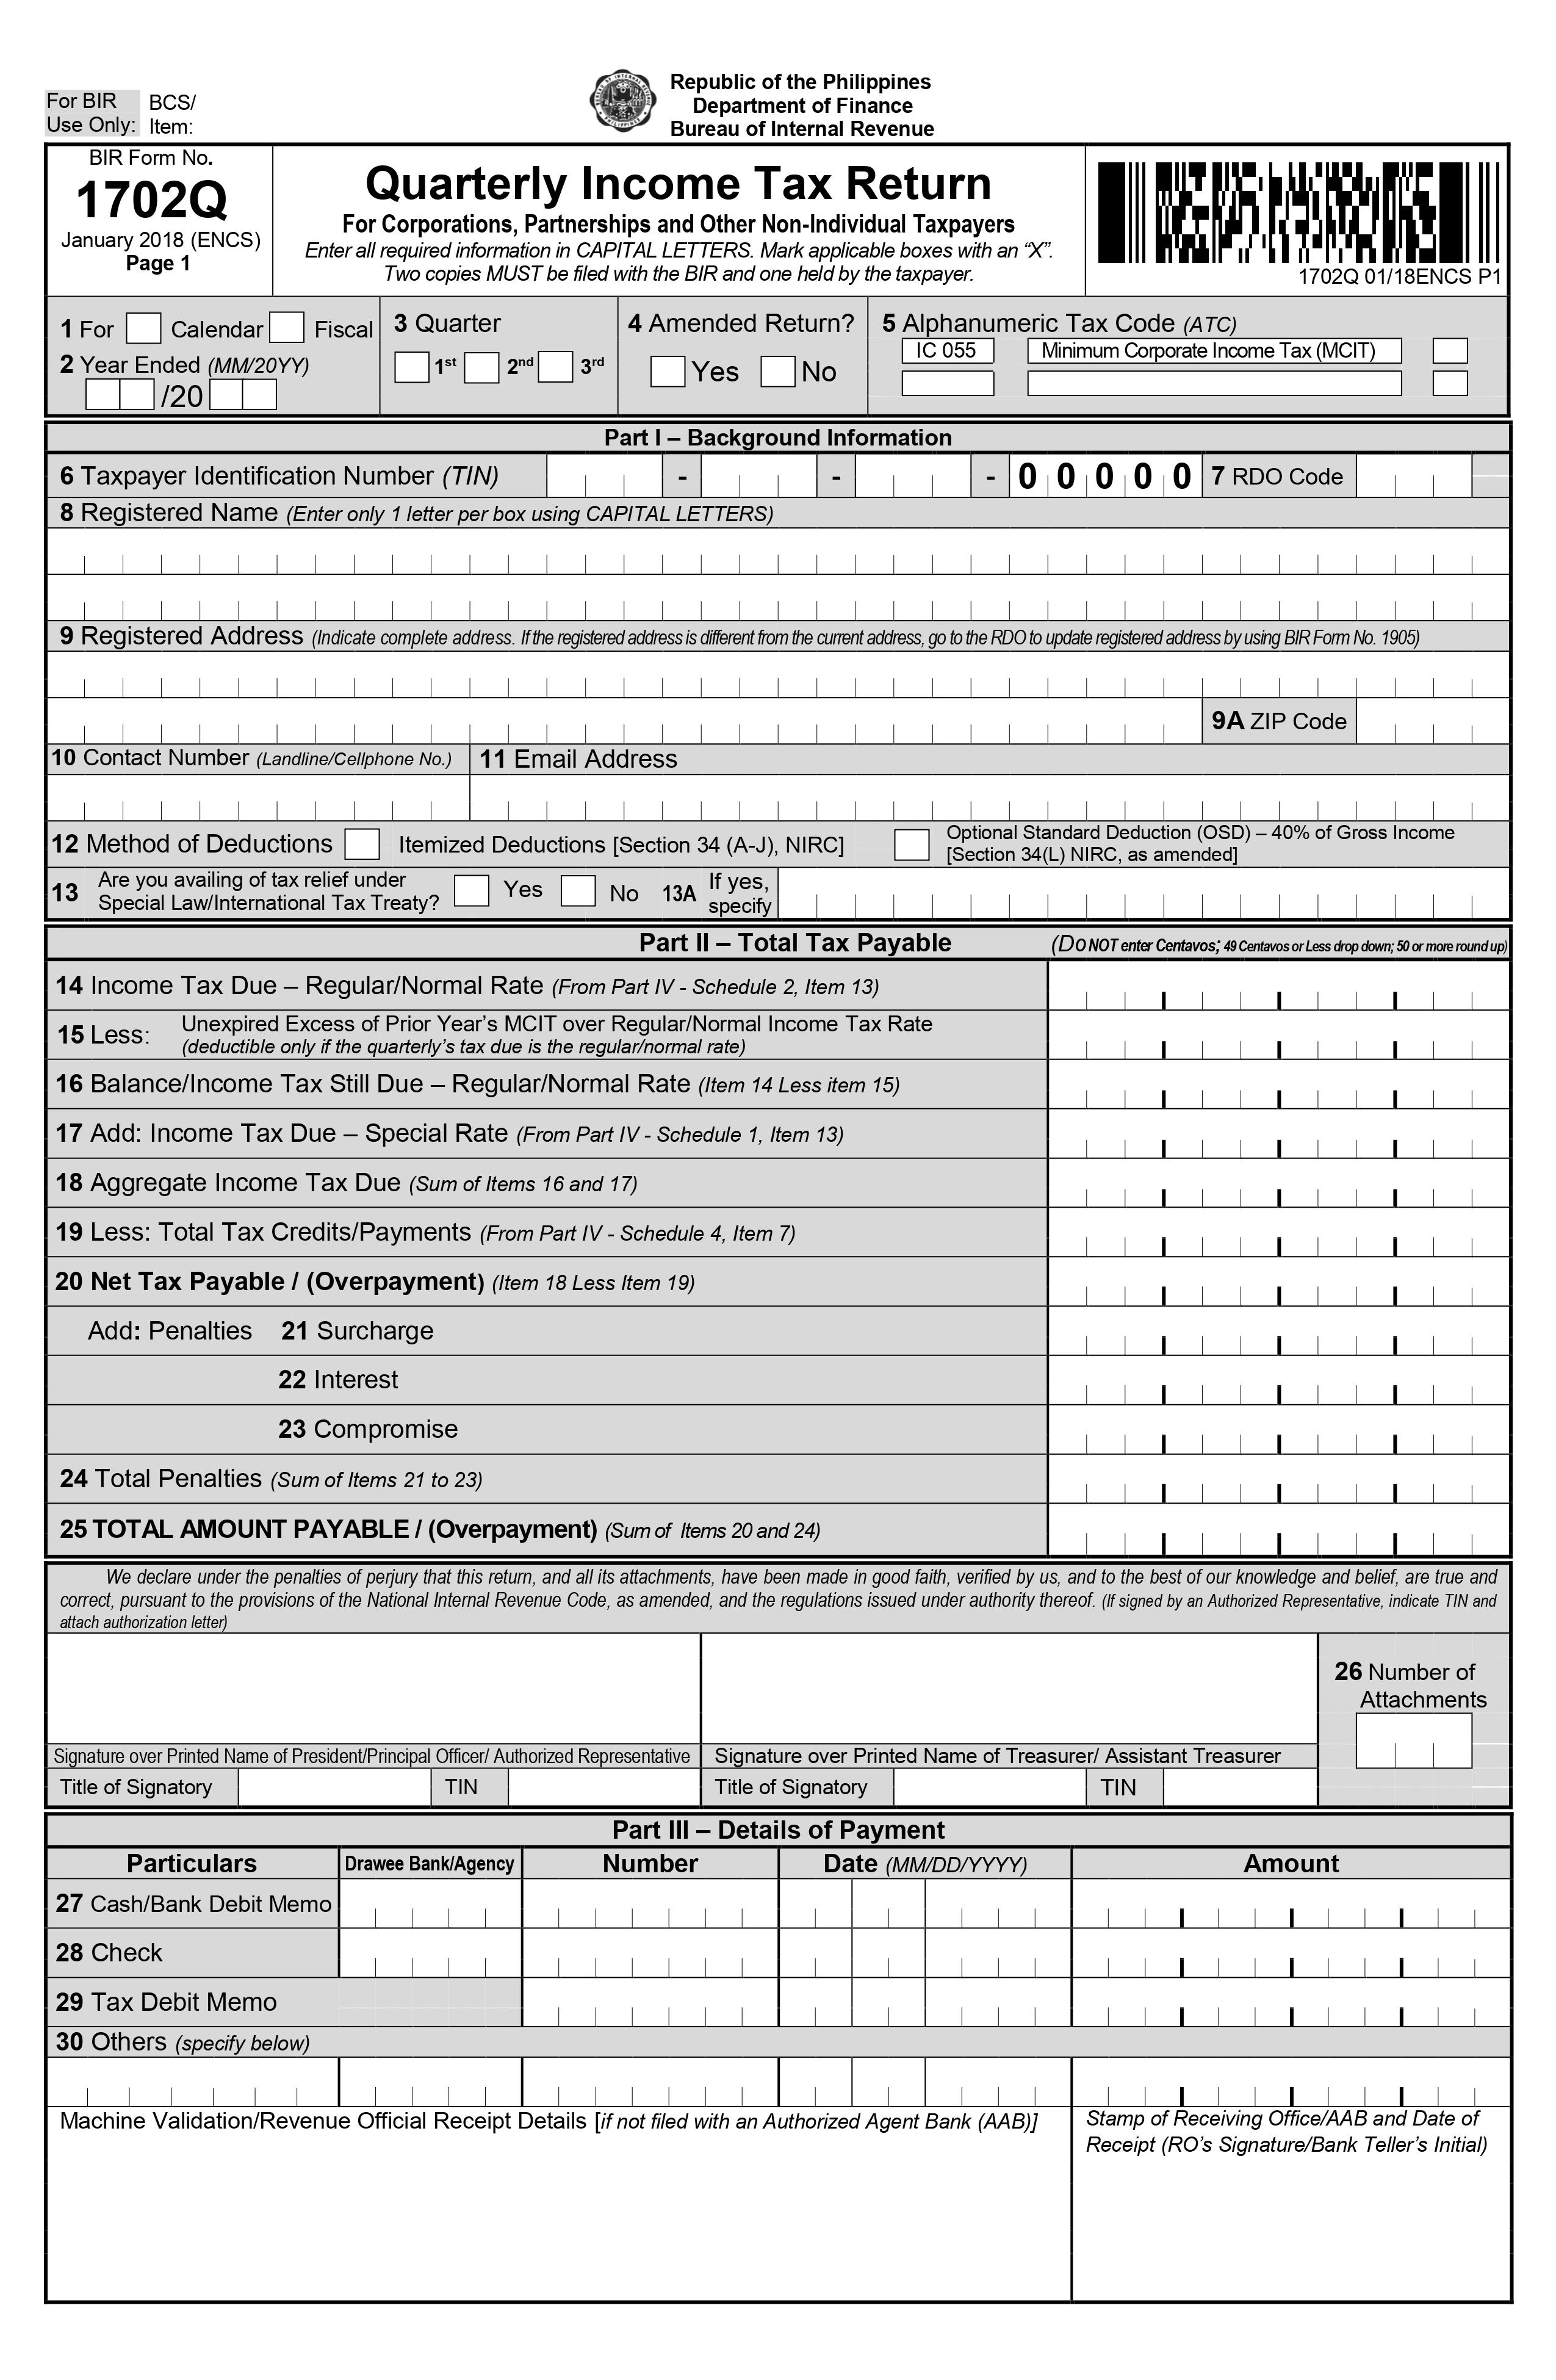 Quarterly Income Tax Return BIR Form 1702Q-1